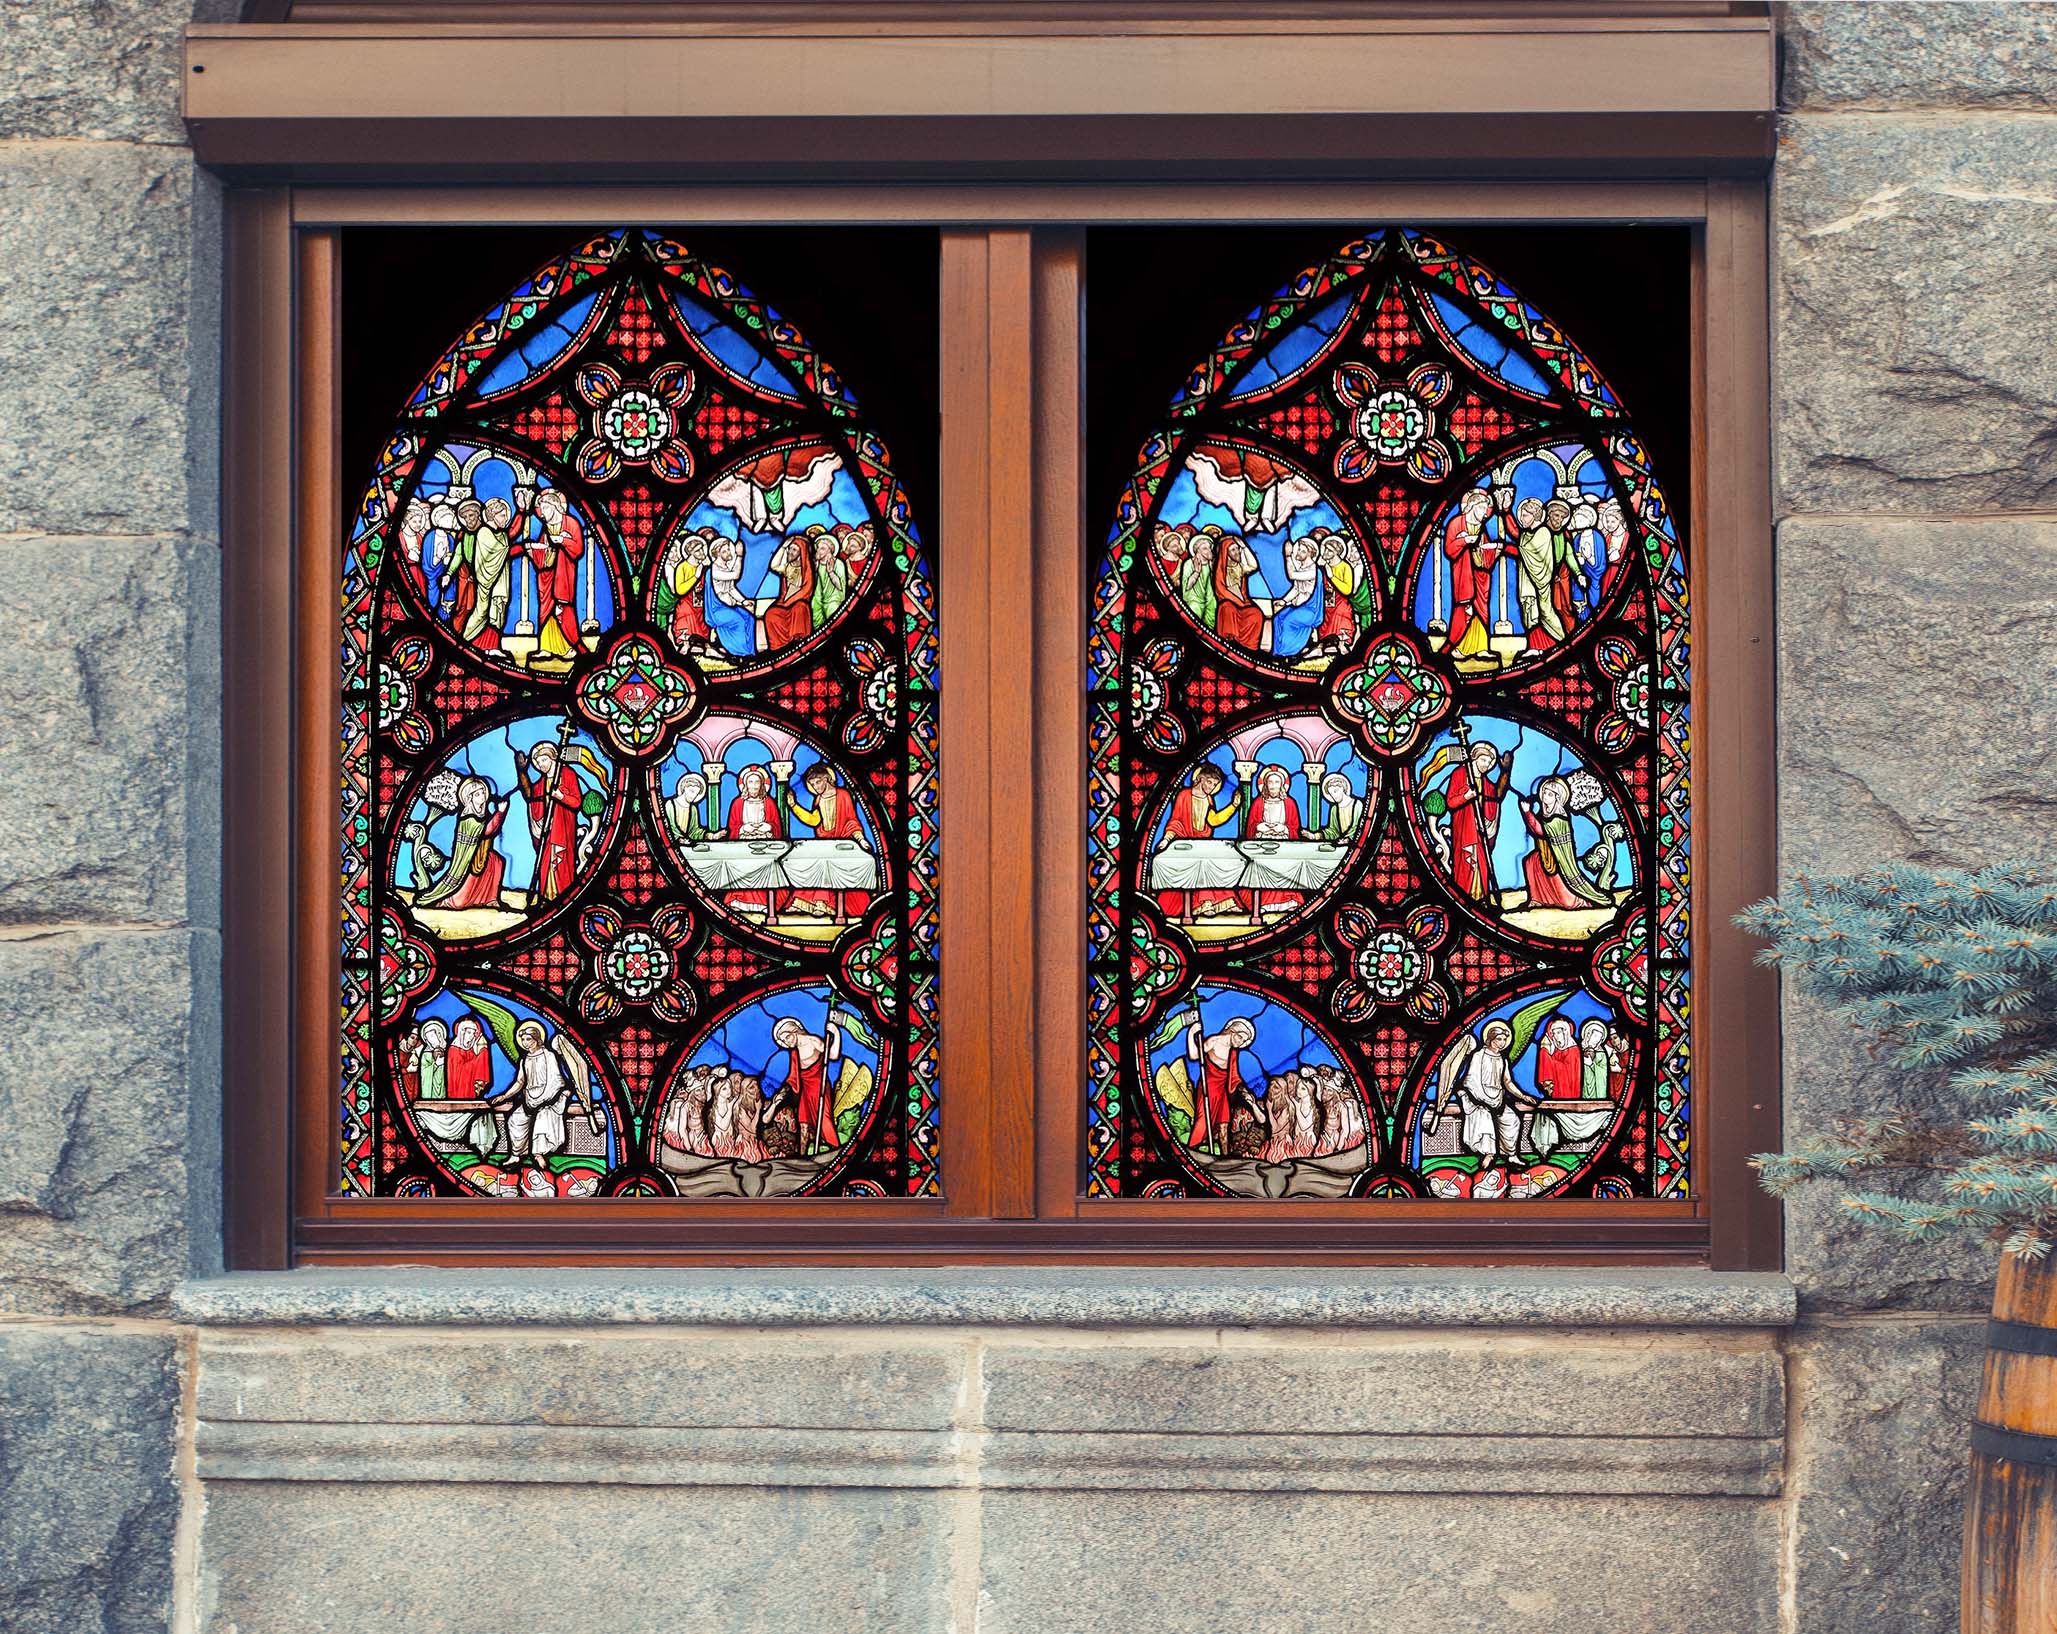 3D Church Belief 414 Window Film Print Sticker Cling Stained Glass UV Block